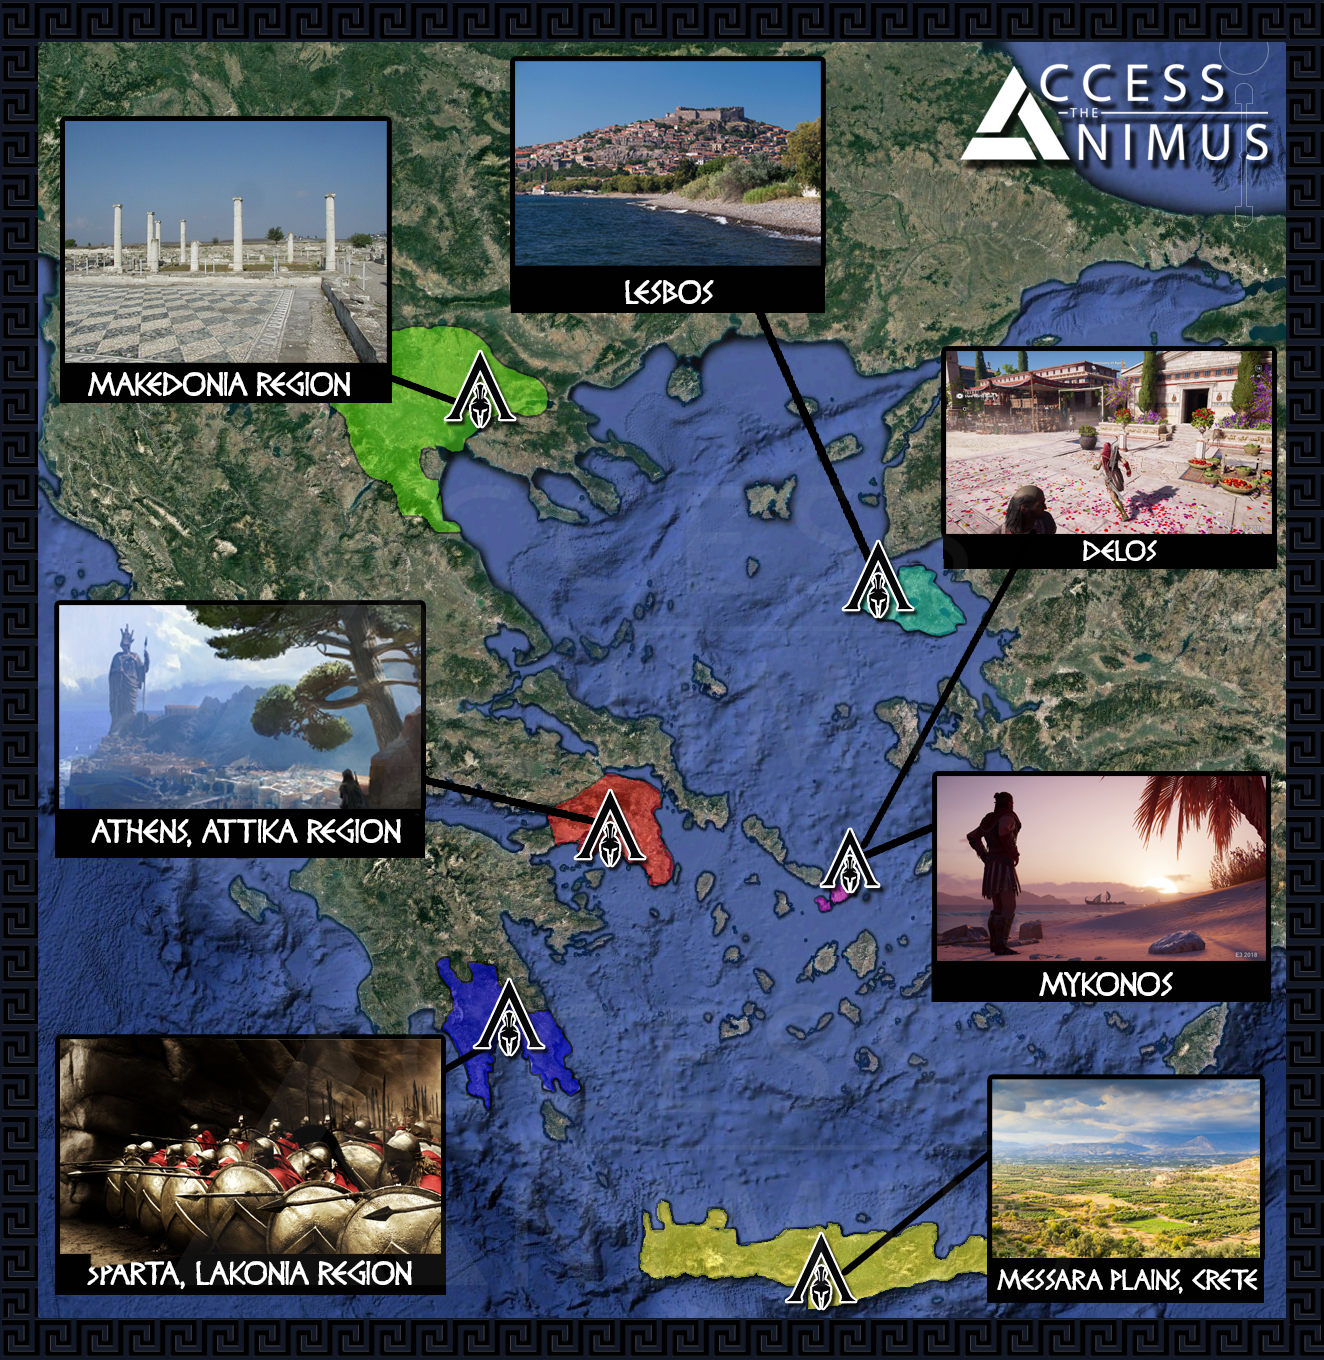 Assassin's Creed Locations : r/AssassinsCreedOdyssey